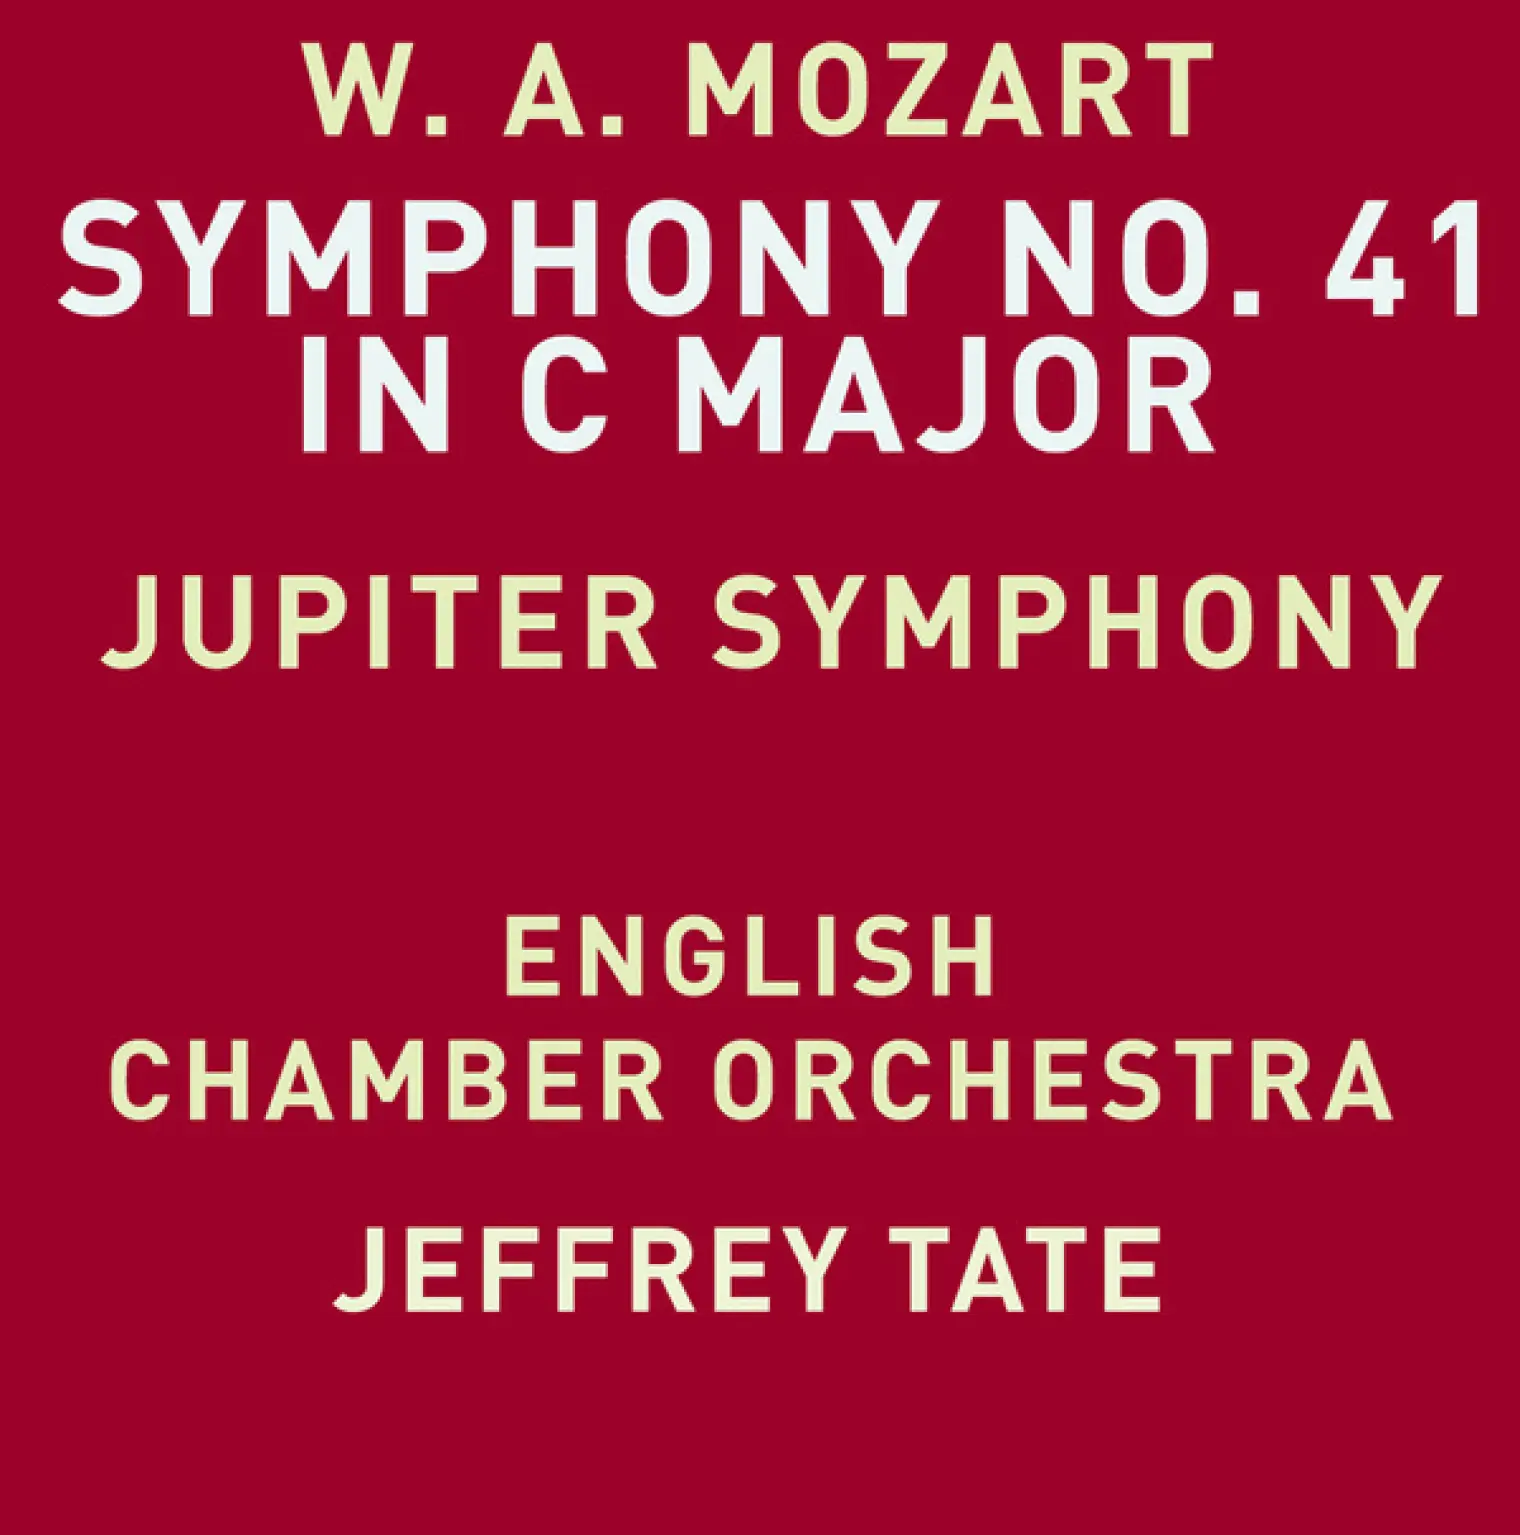 Mozart: Symphony No. 41 in C Major, K. 551 "Jupiter" -  English Chamber Orchestra 